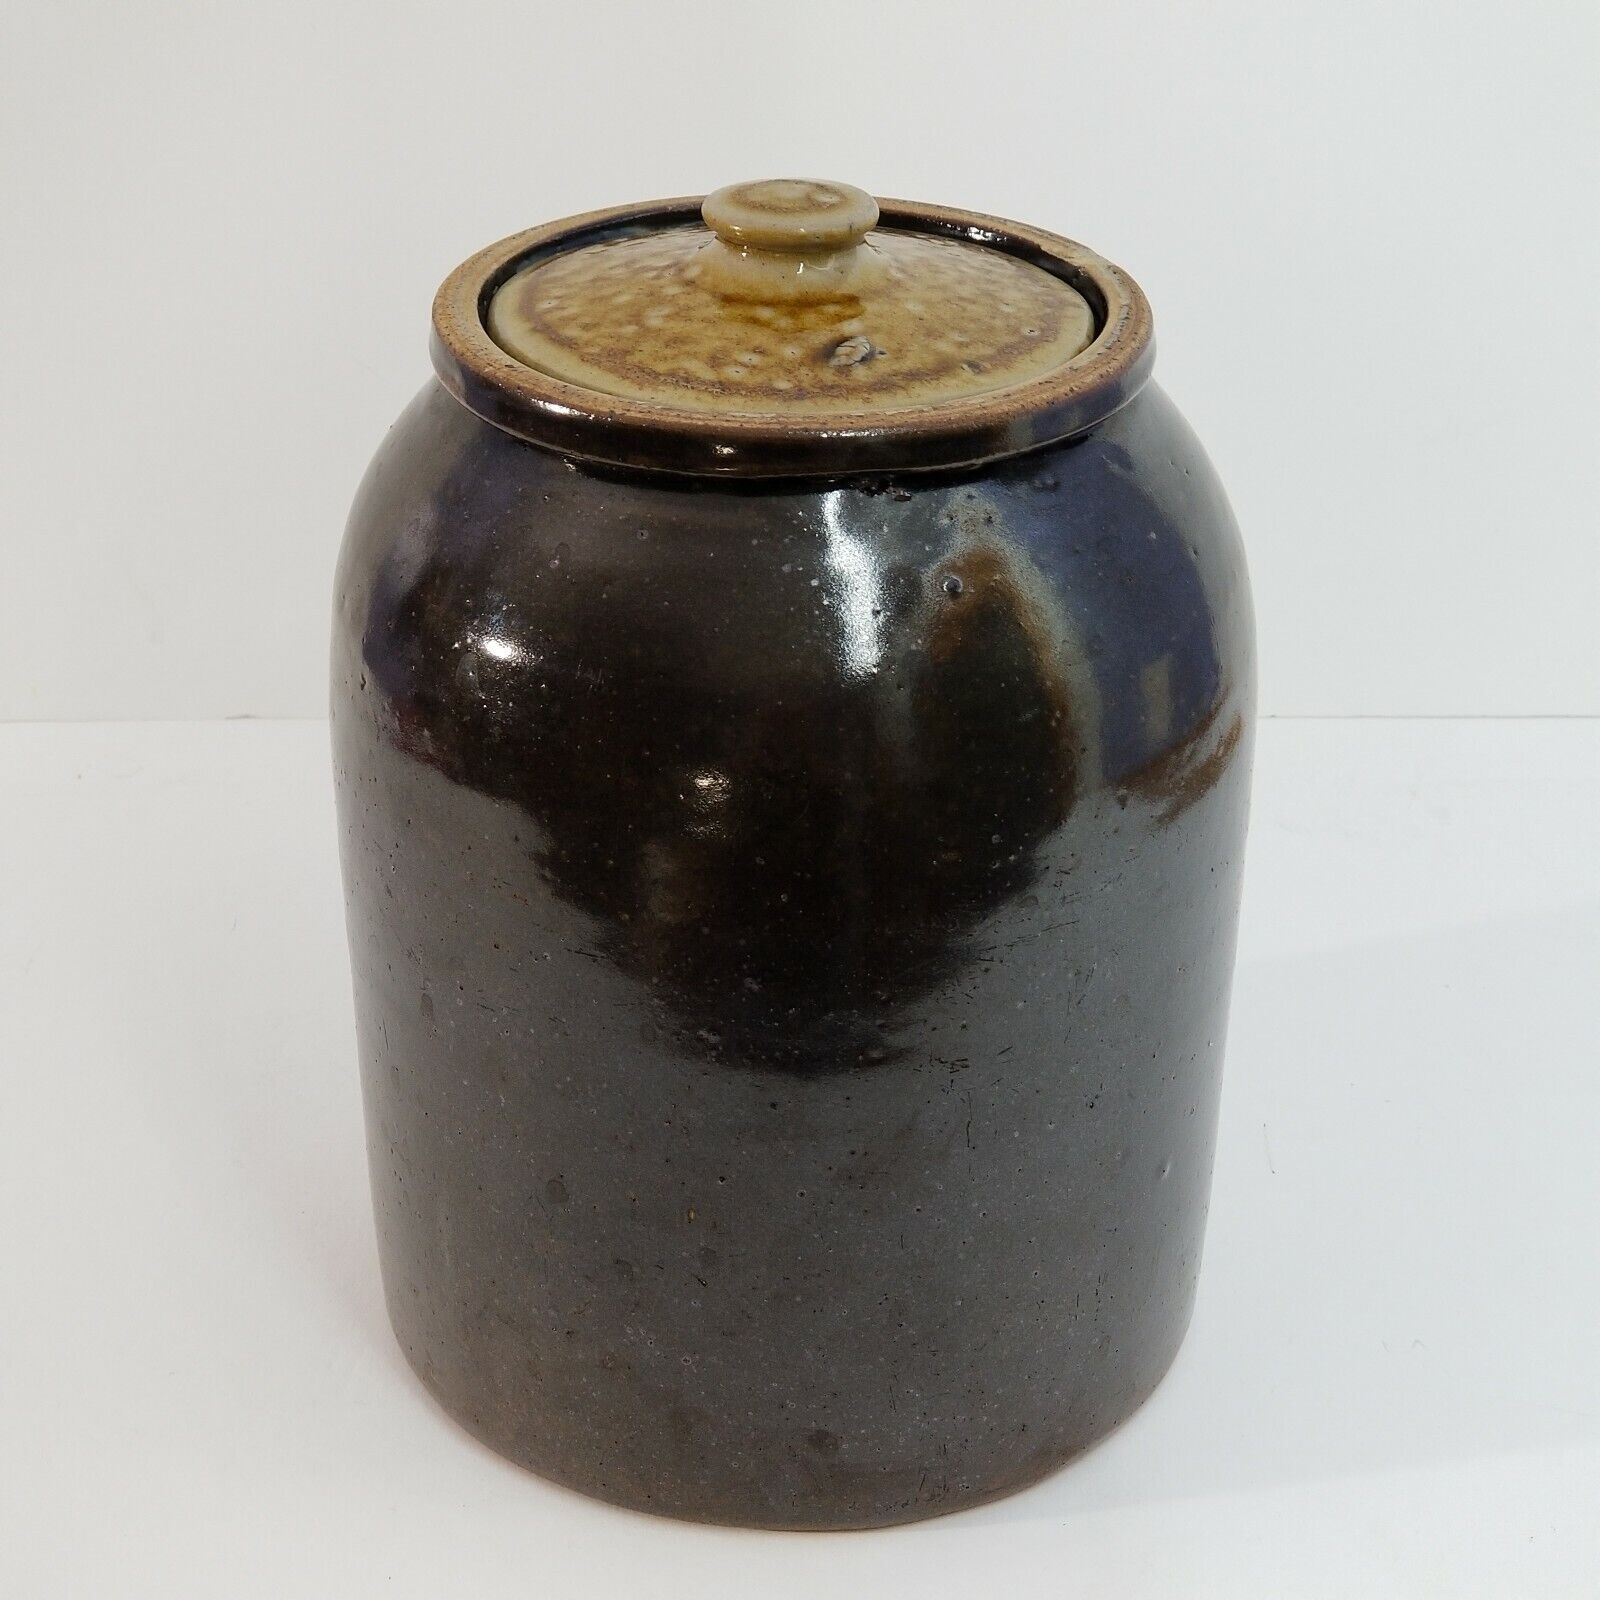 VTG LIDDED CROCK Jar STONEWARE Hand Thrown Pottery DK CHOC BROWN GLAZE Antique?